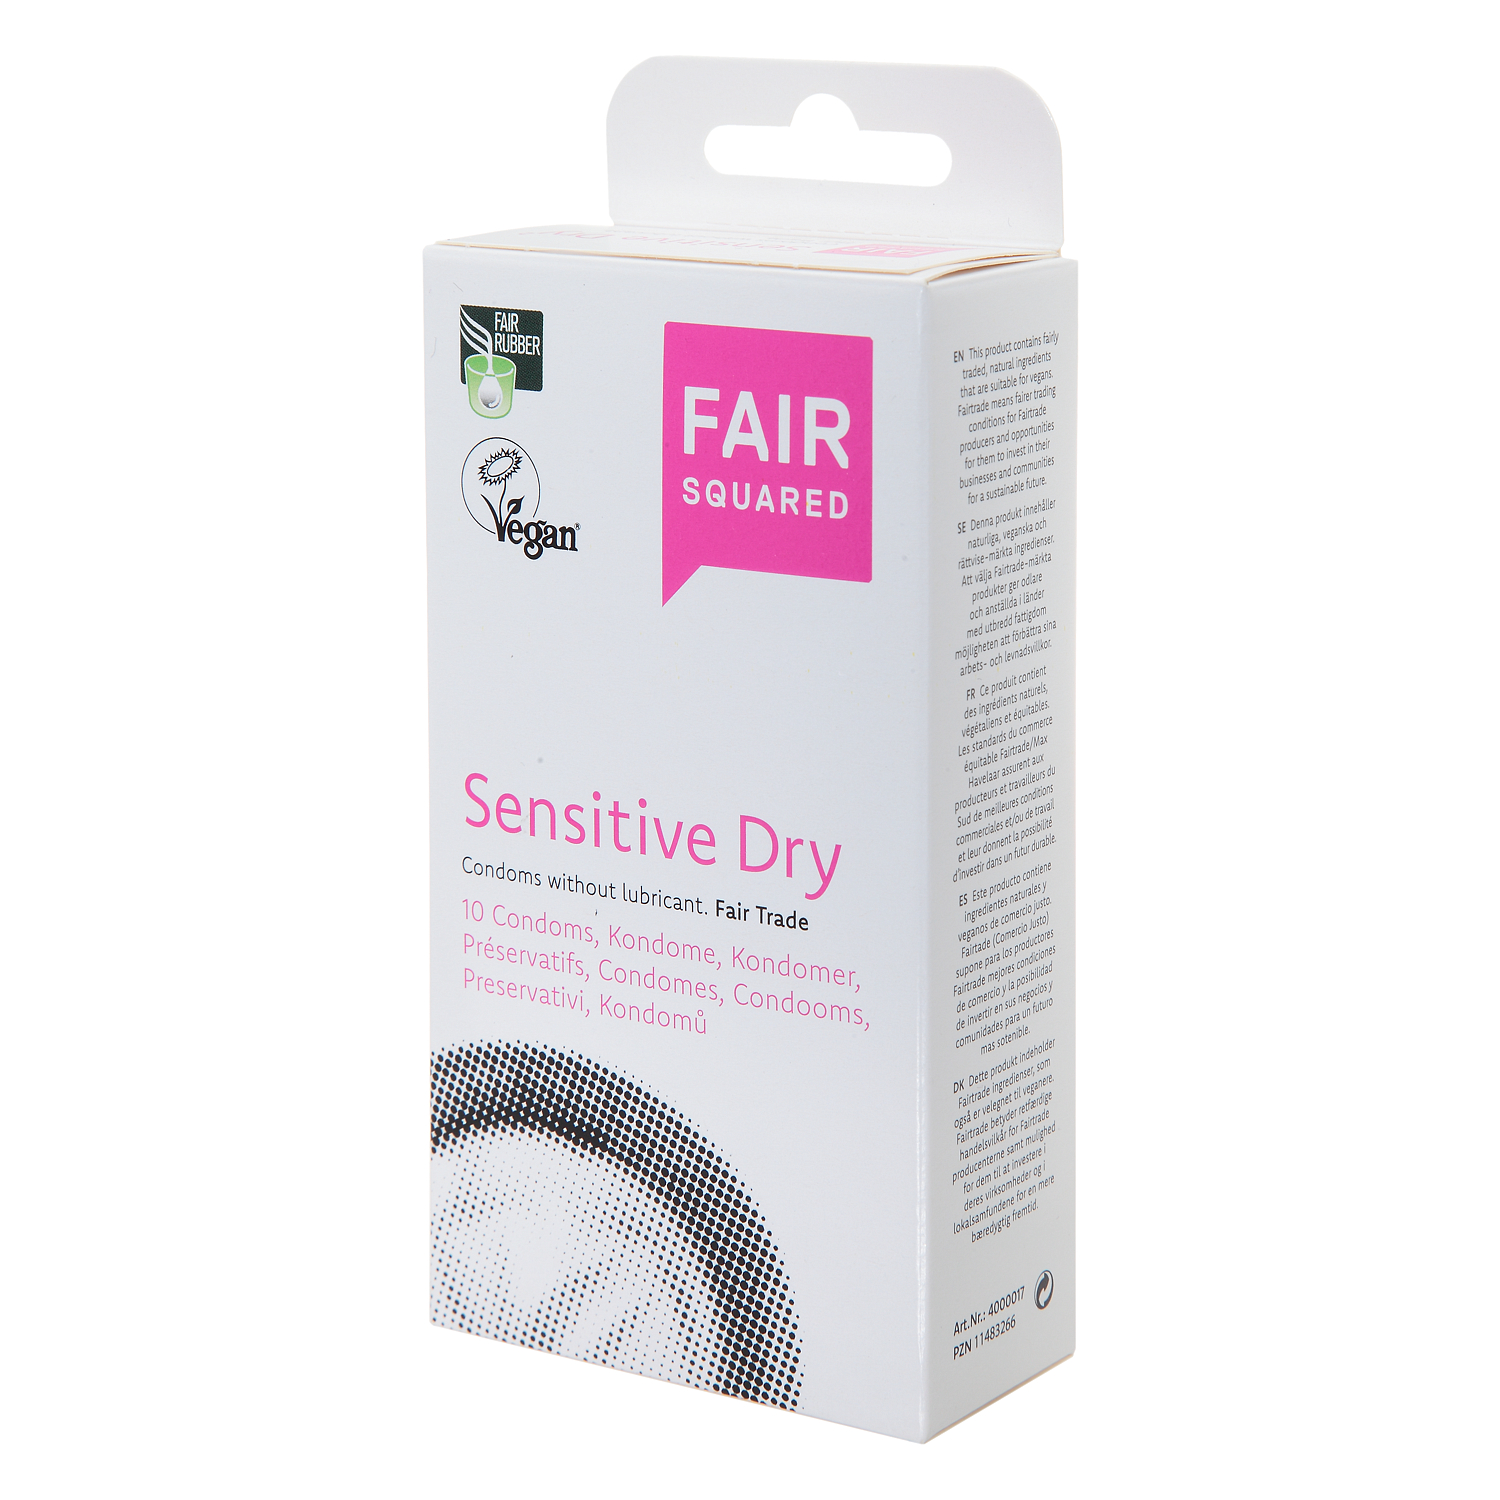 Se FAIR SQUARED - Sensitive Dry Kondom hos Organic Beauty Supply